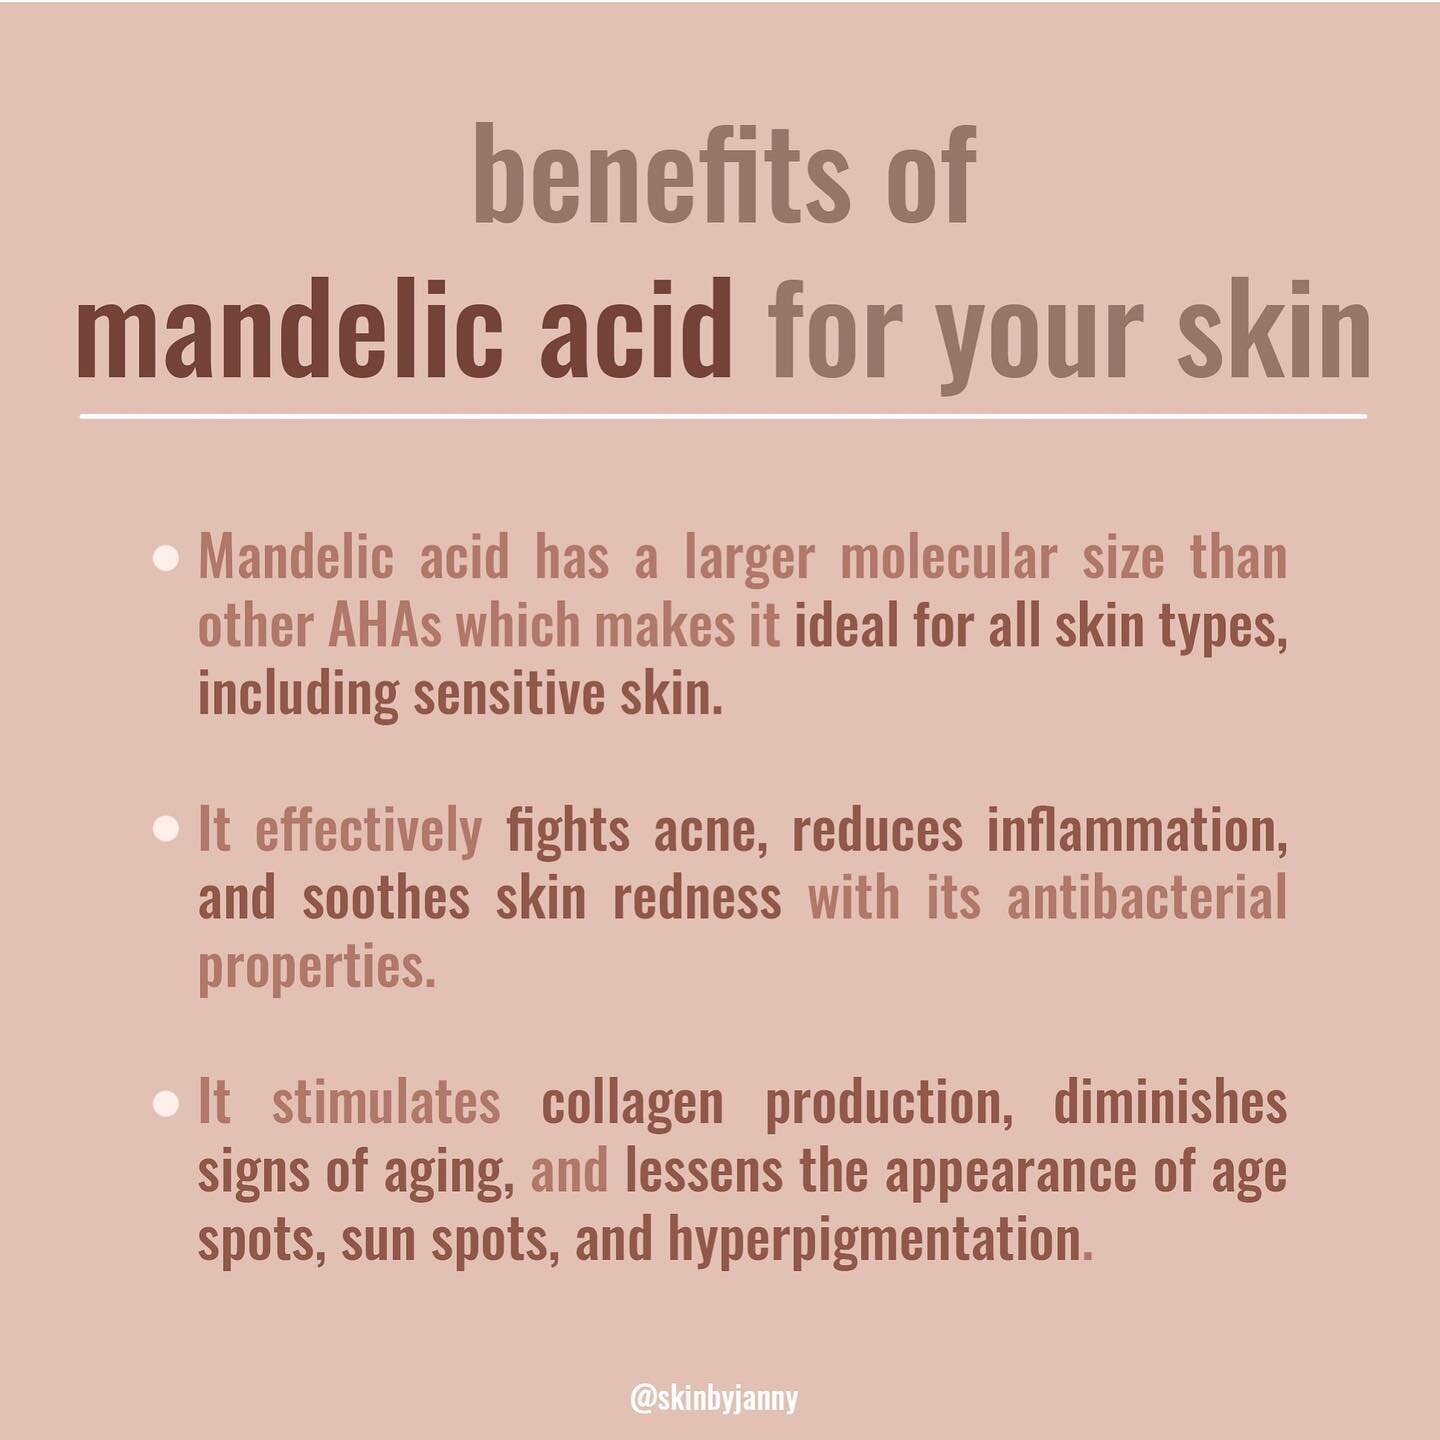 mandelic acid #benefits